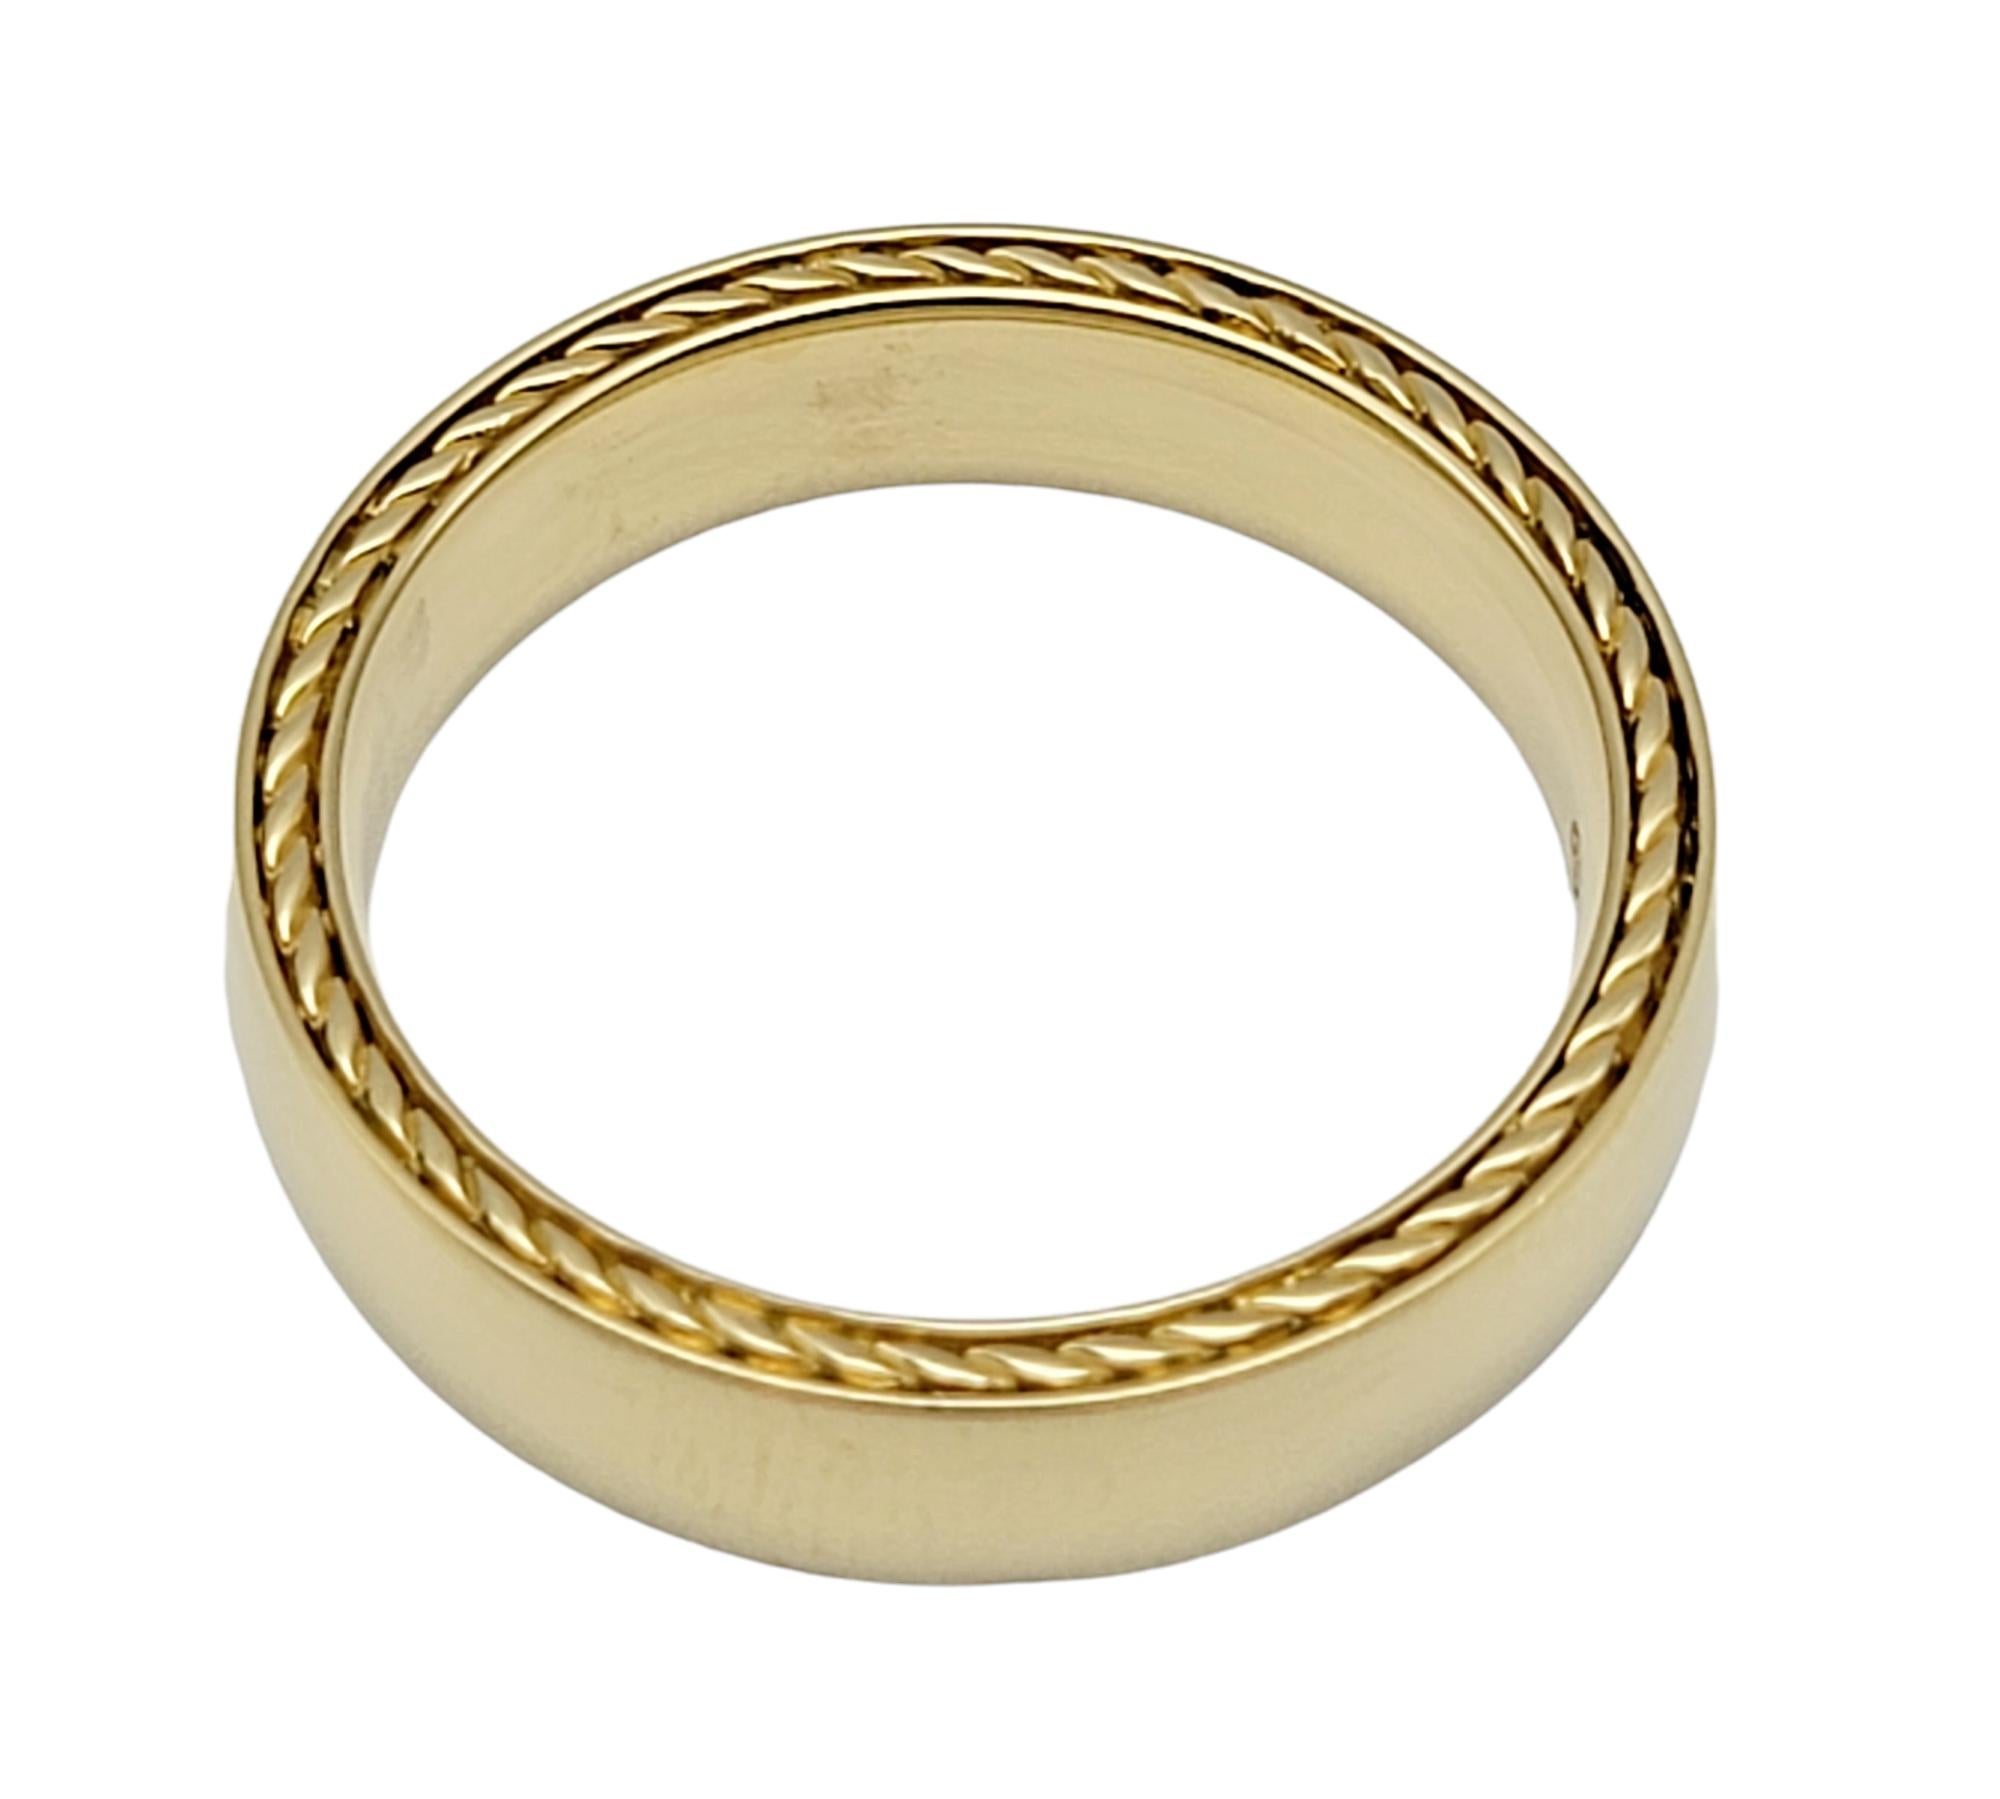 Contemporary David Yurman Mens Polished 18 Karat Yellow Gold Band Ring with Cable Trim